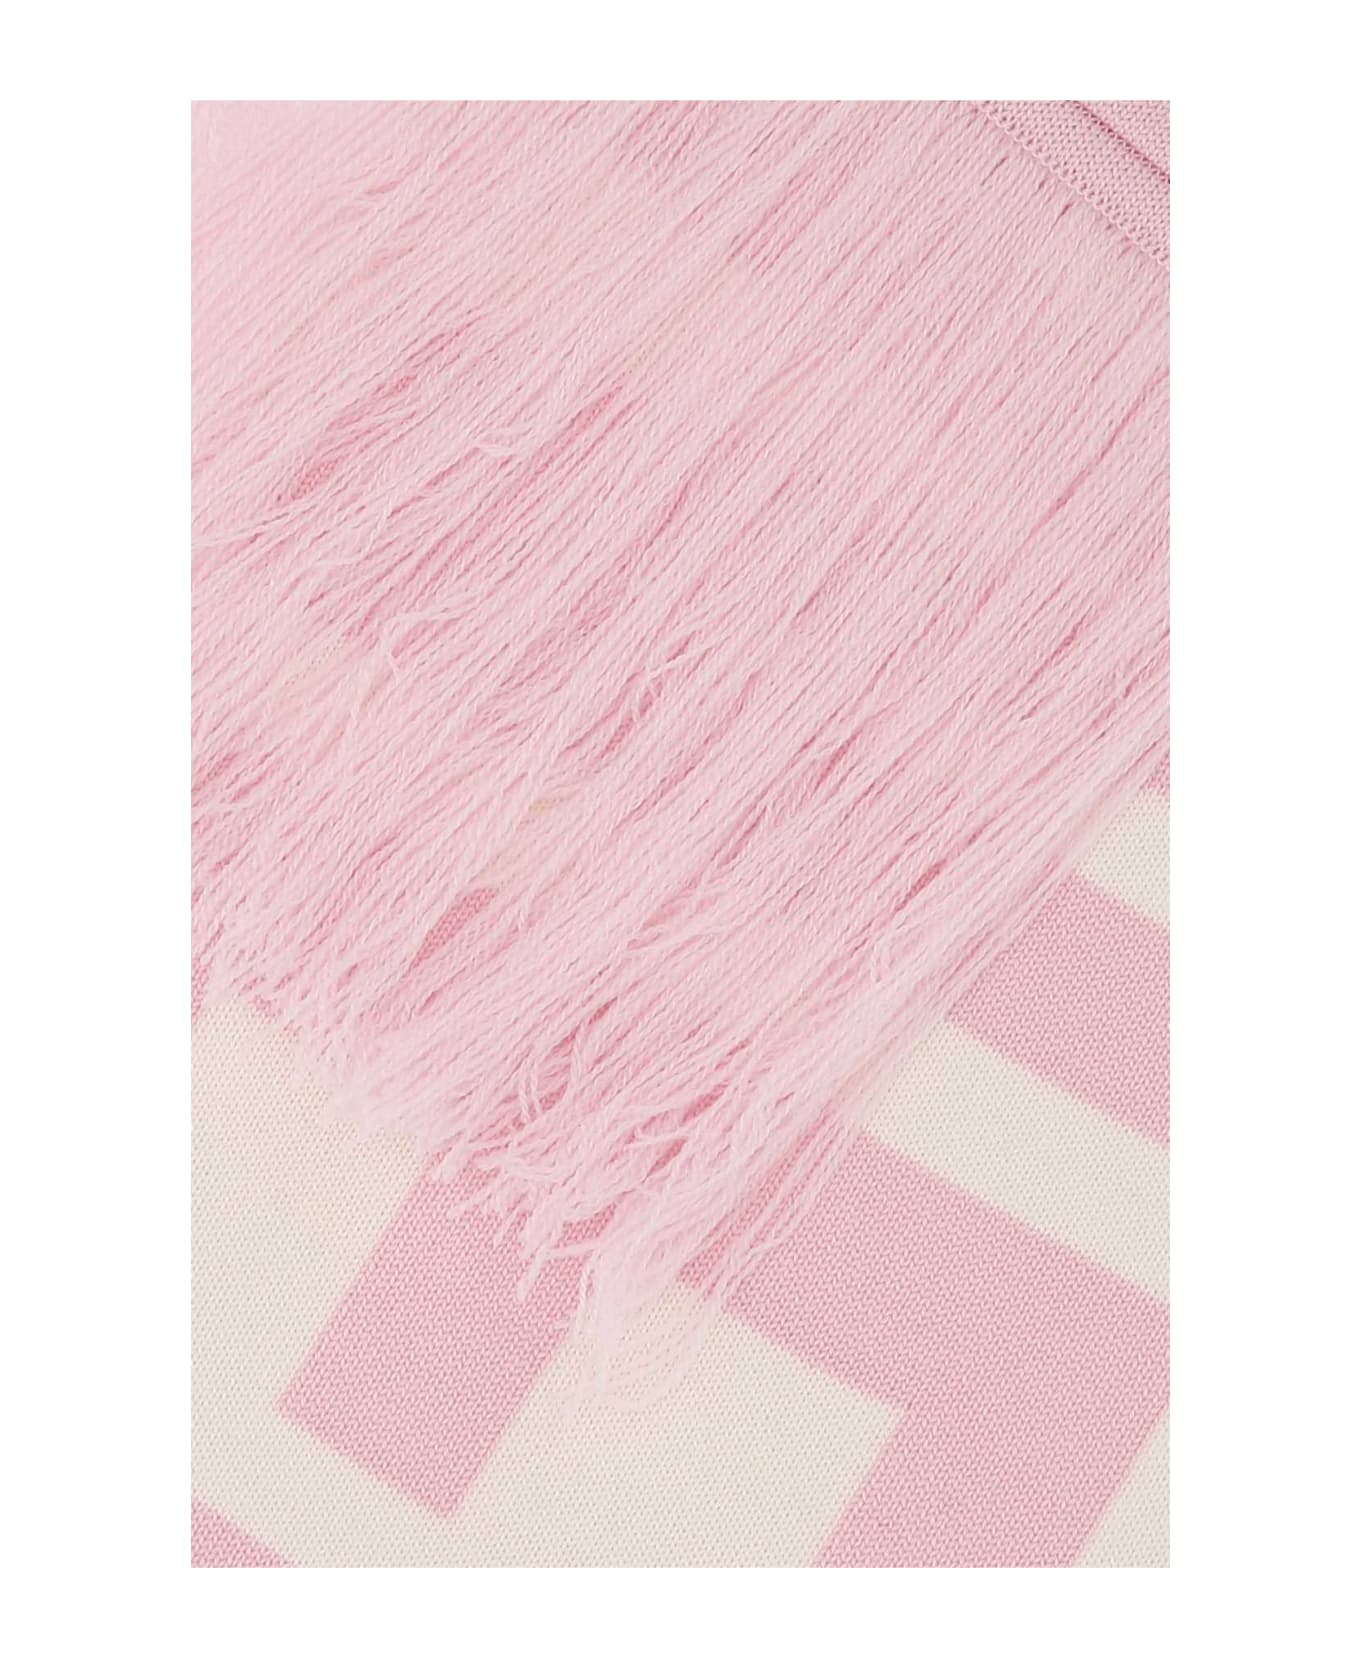 VETEMENTS Pink Wool Scarf - BABYPINK スカーフ